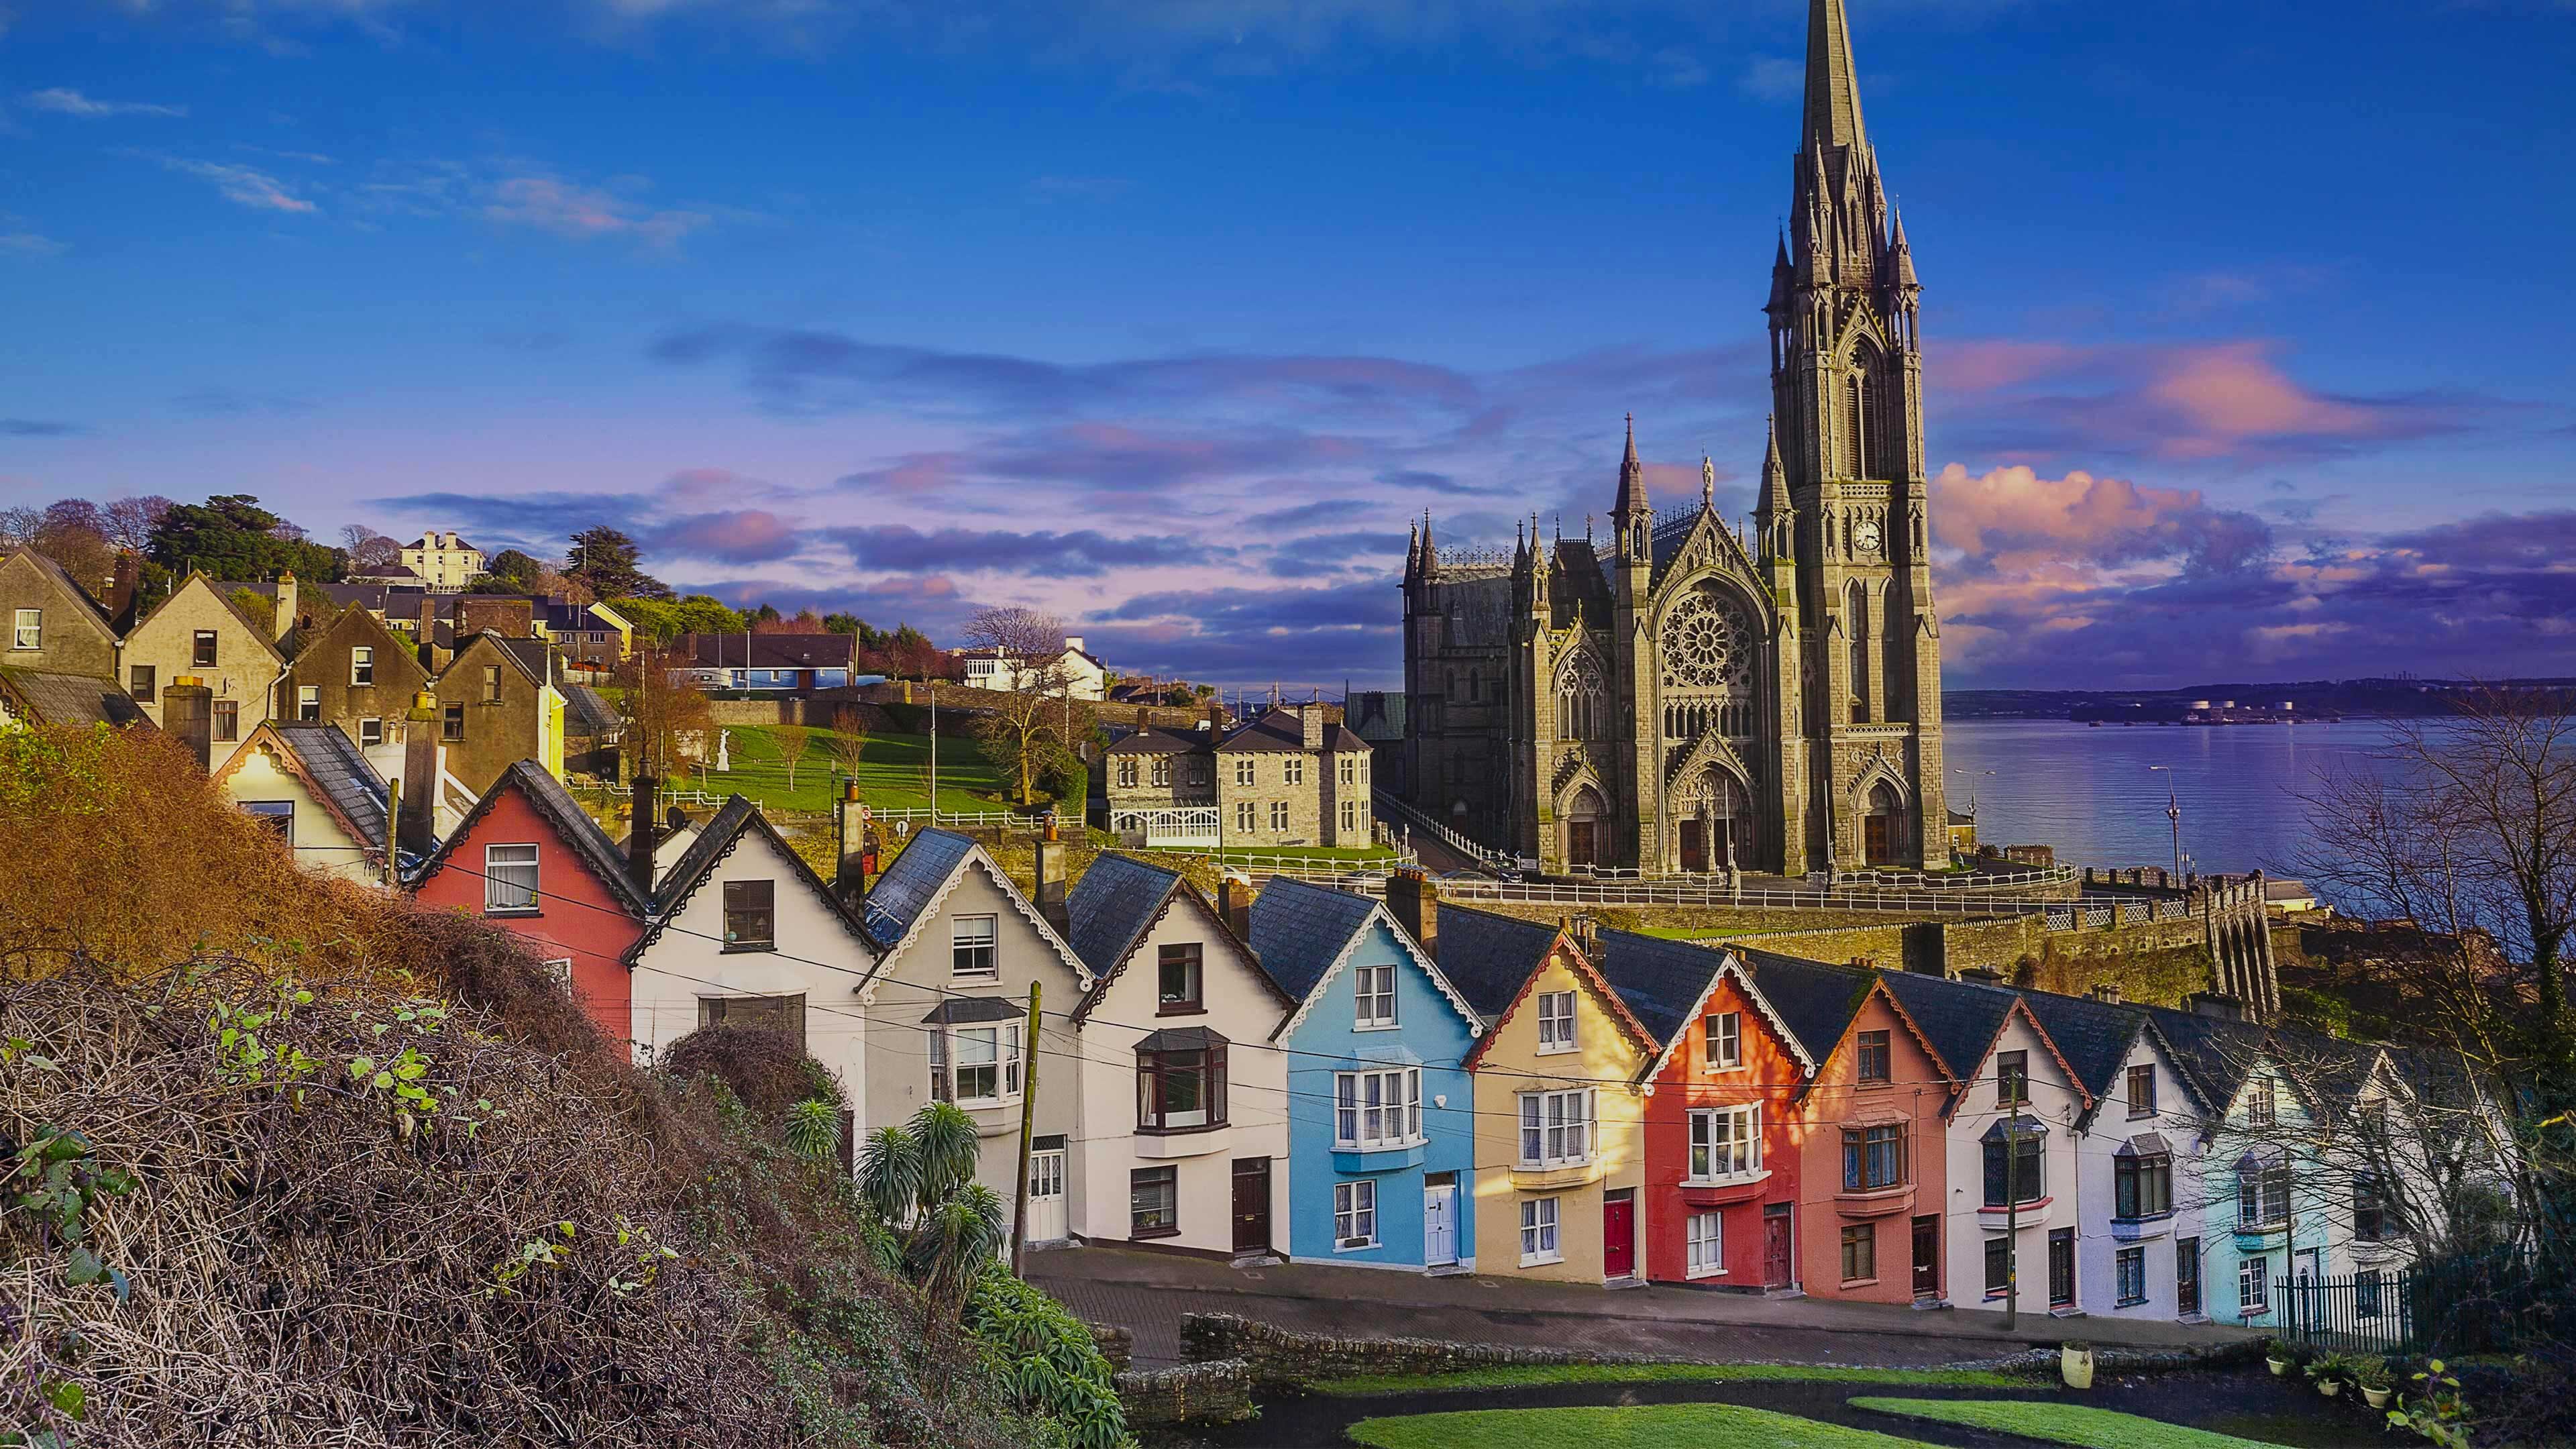 Lovely town - Review of Cobh, Ireland - Tripadvisor